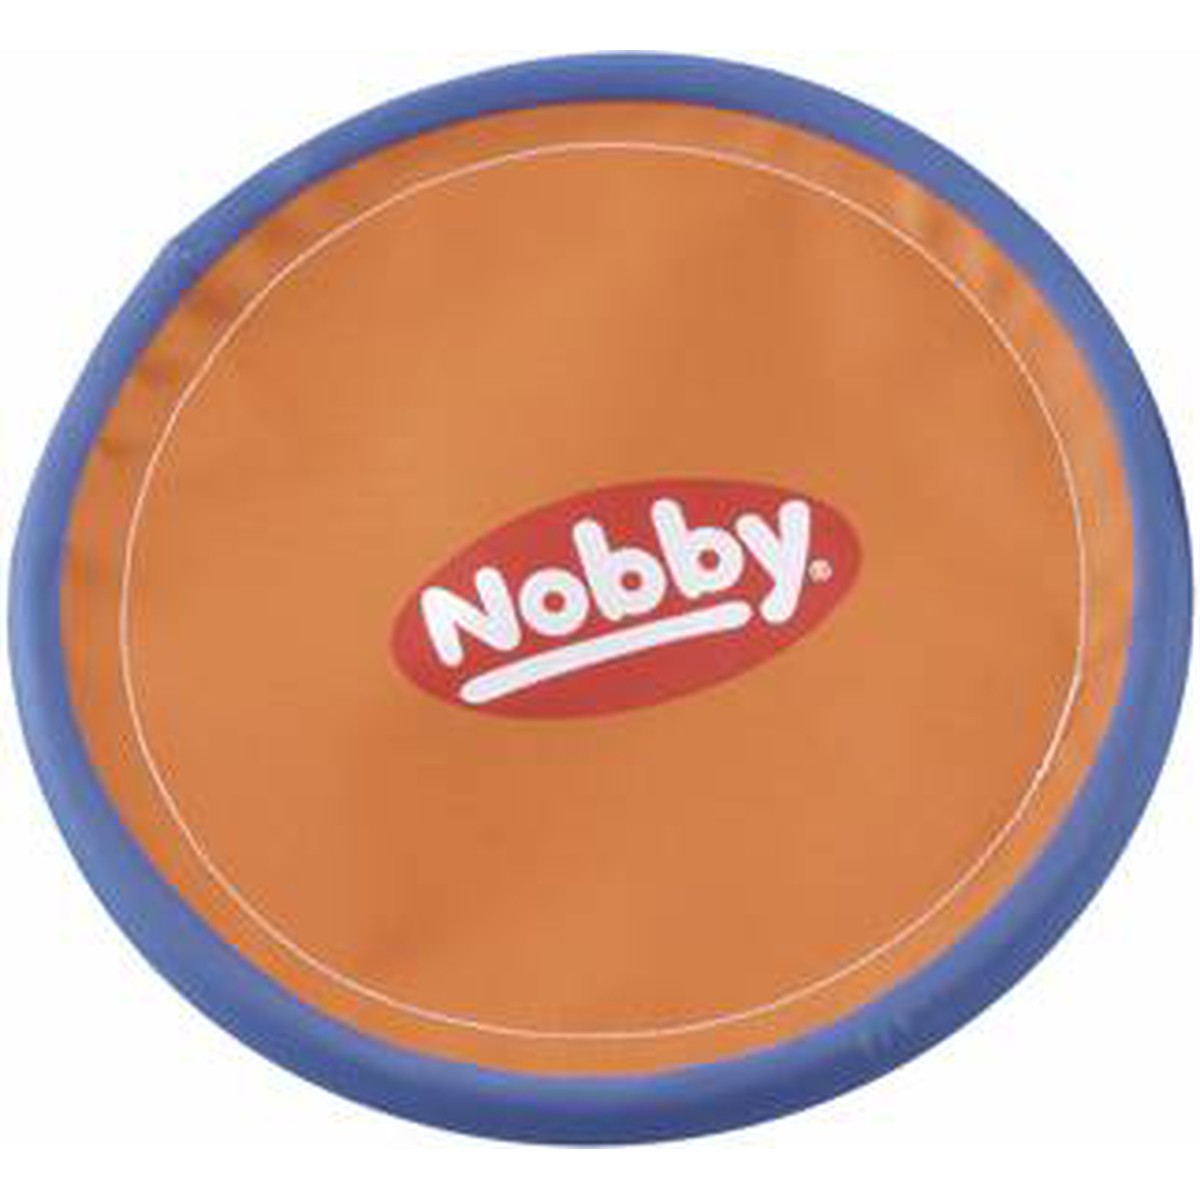   Frisbee en nylon. fermé. 23 cm  23cm